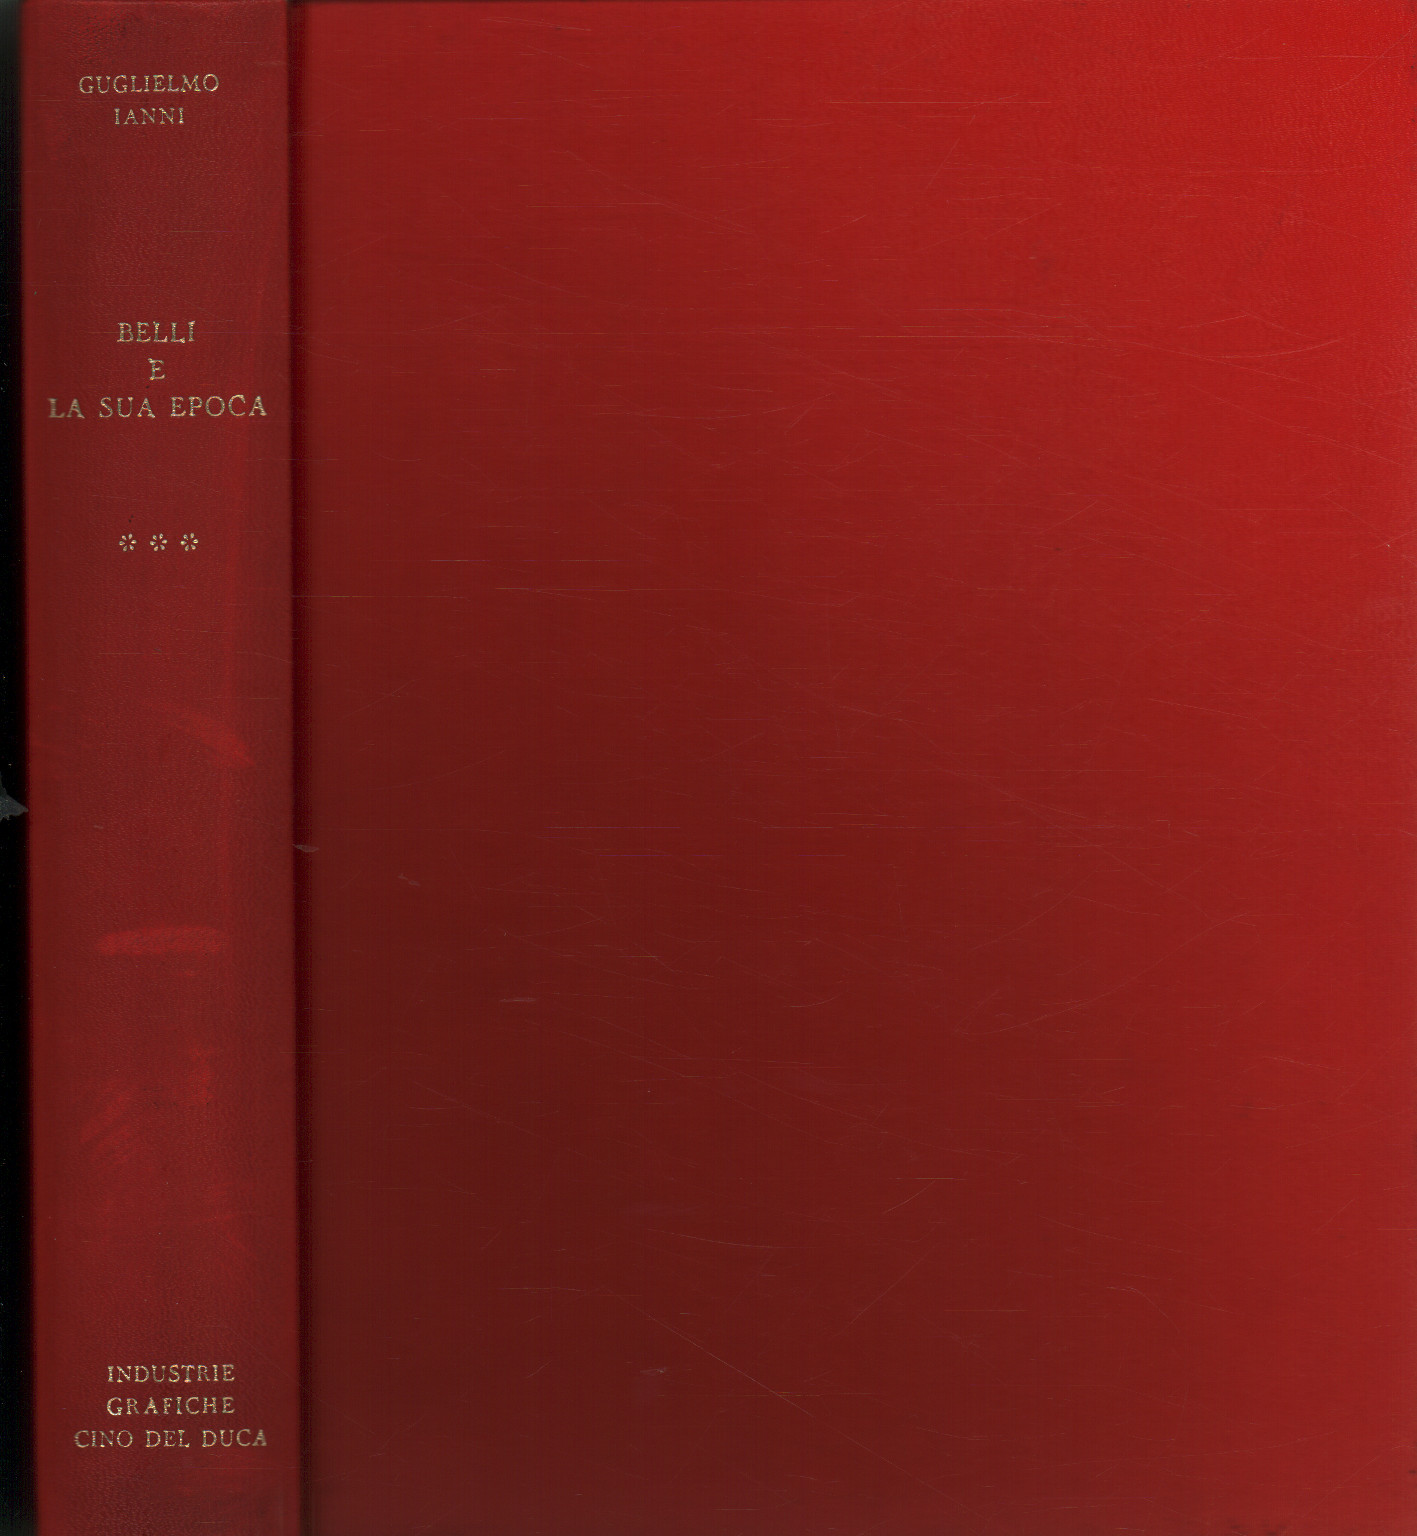 Belli e la sua epoca.Volume III, Guglielmo Ianni